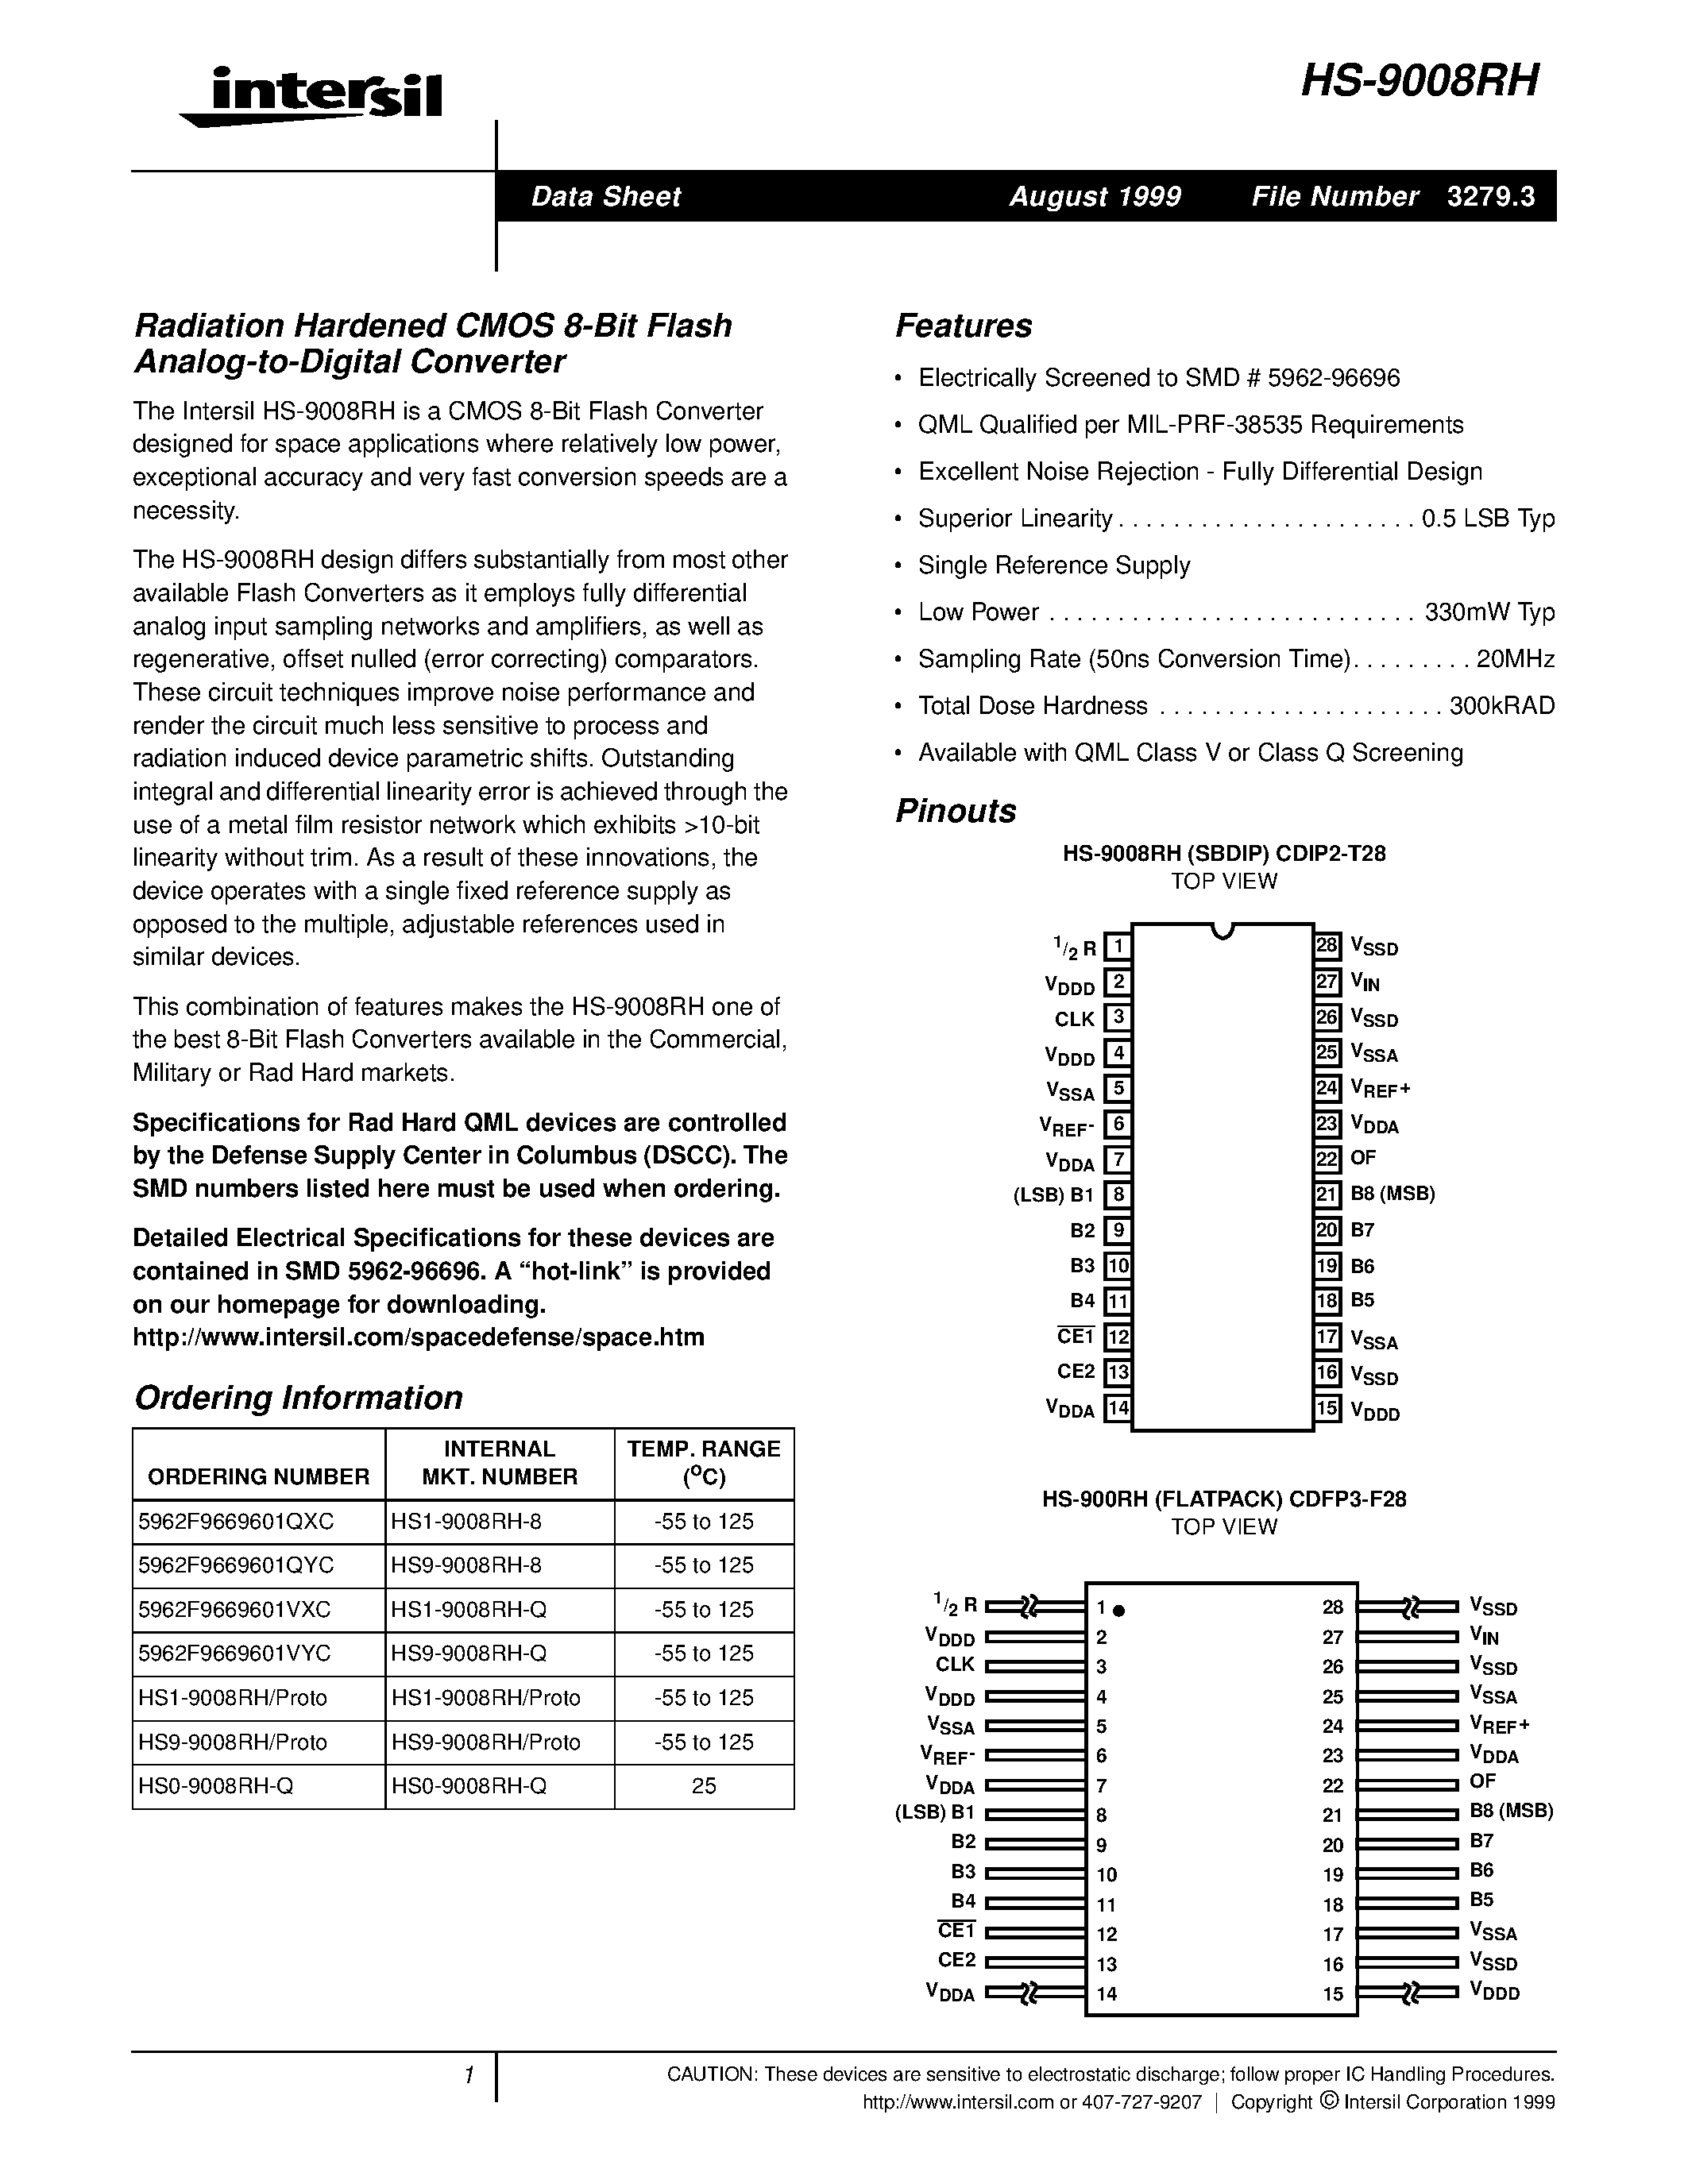 Даташит HS9-9008RH-8 - Radiation Hardened CMOS 8-Bit Flash Analog-to-Digital Converter страница 1